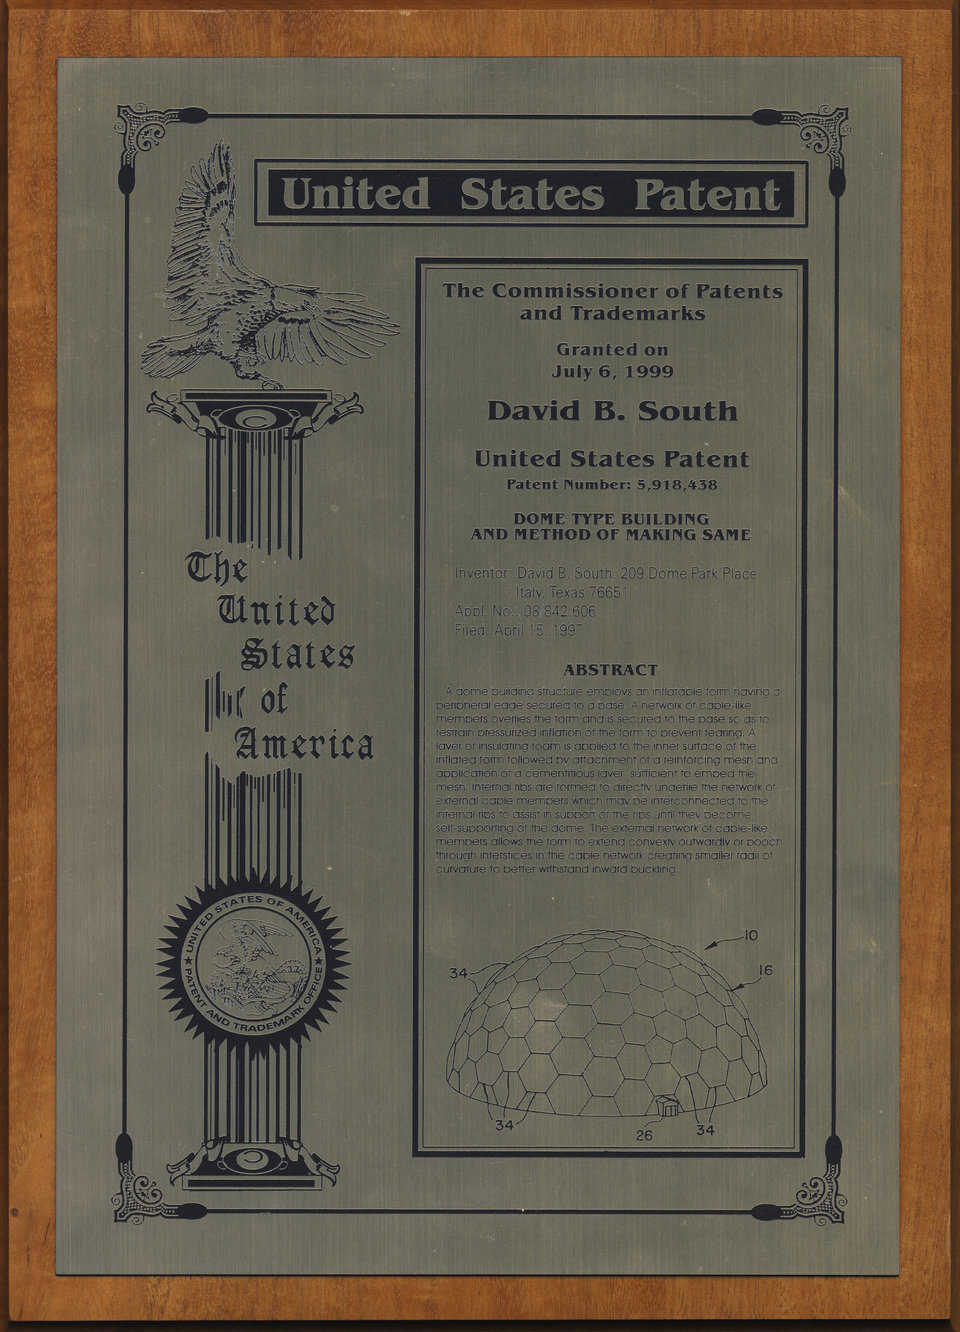 U.S. Patent #5,918,438